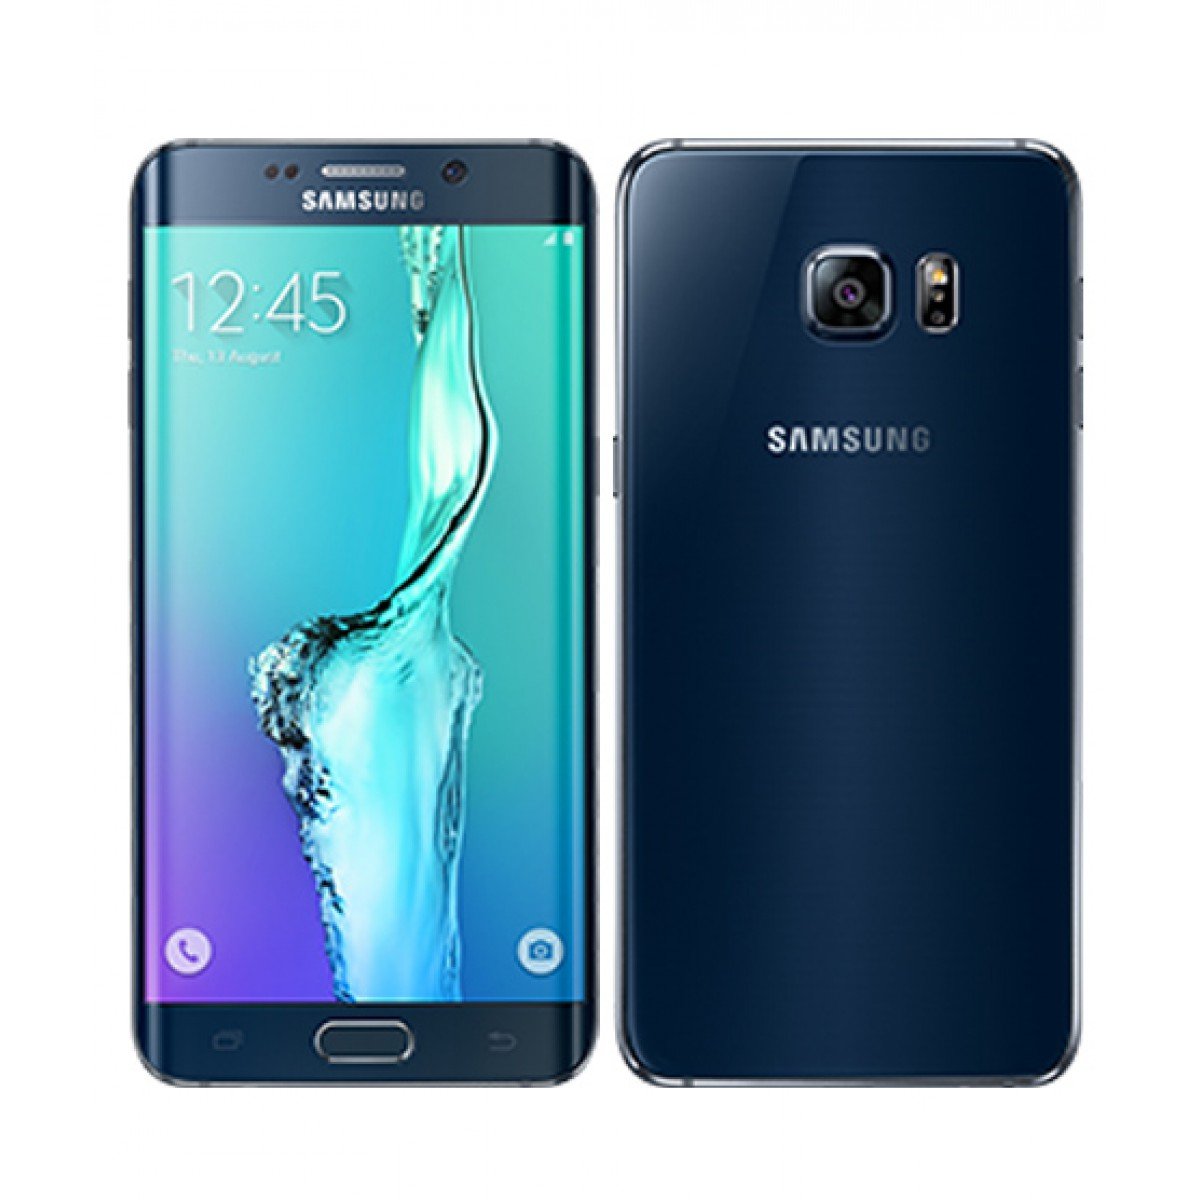 Samsung Galaxy S6 Edge Se Incalzeste SmartPhone Samsung Galaxy S6 Edge Plus - JS Tecnología